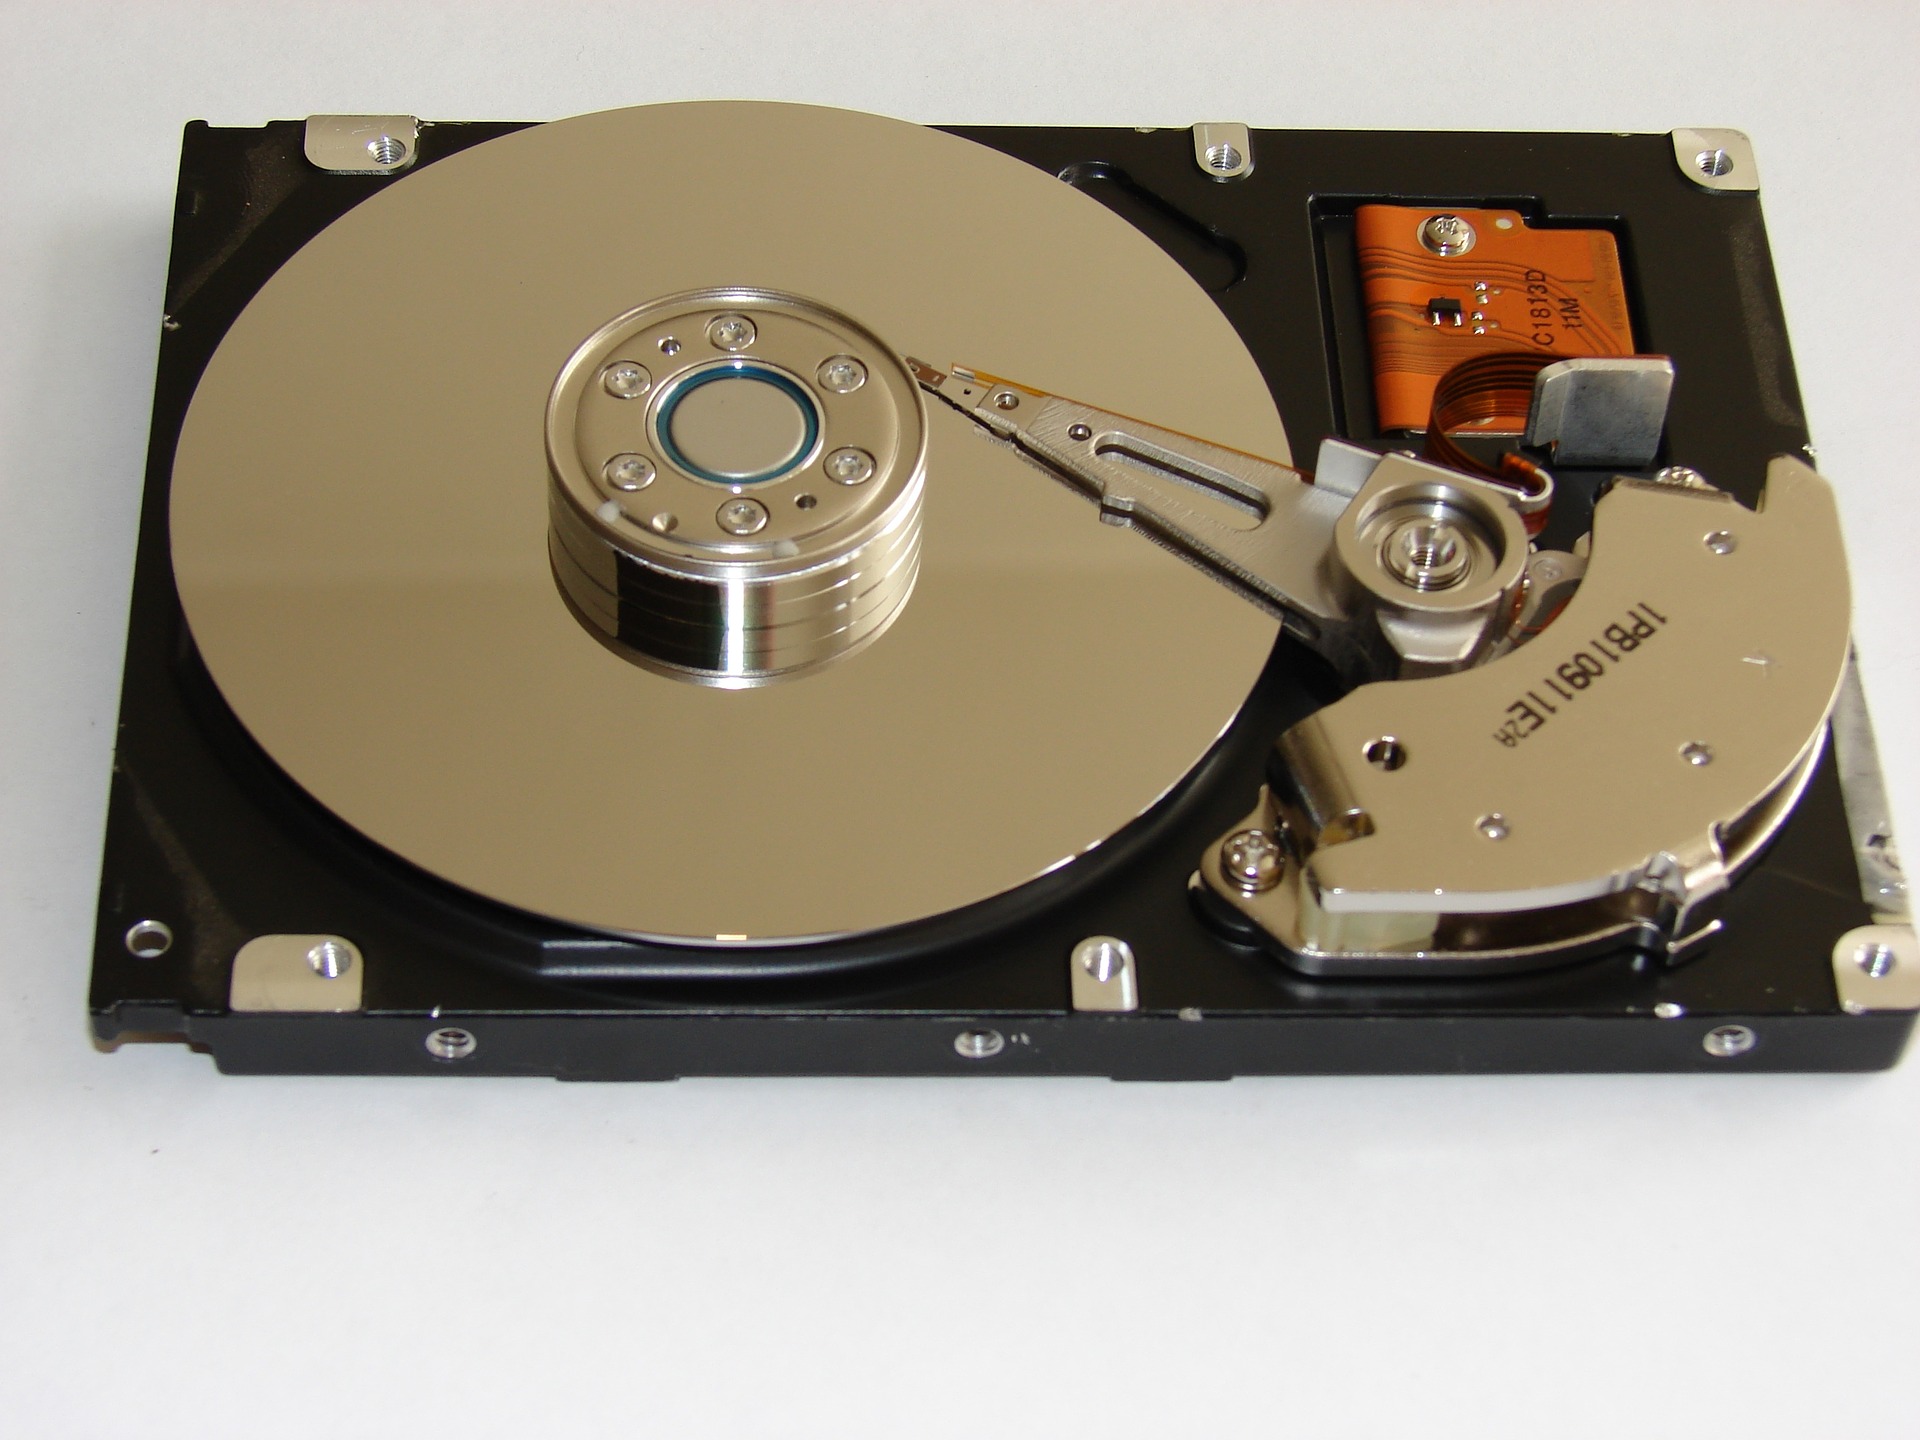 hard-disk-drive-838665_1920.jpg